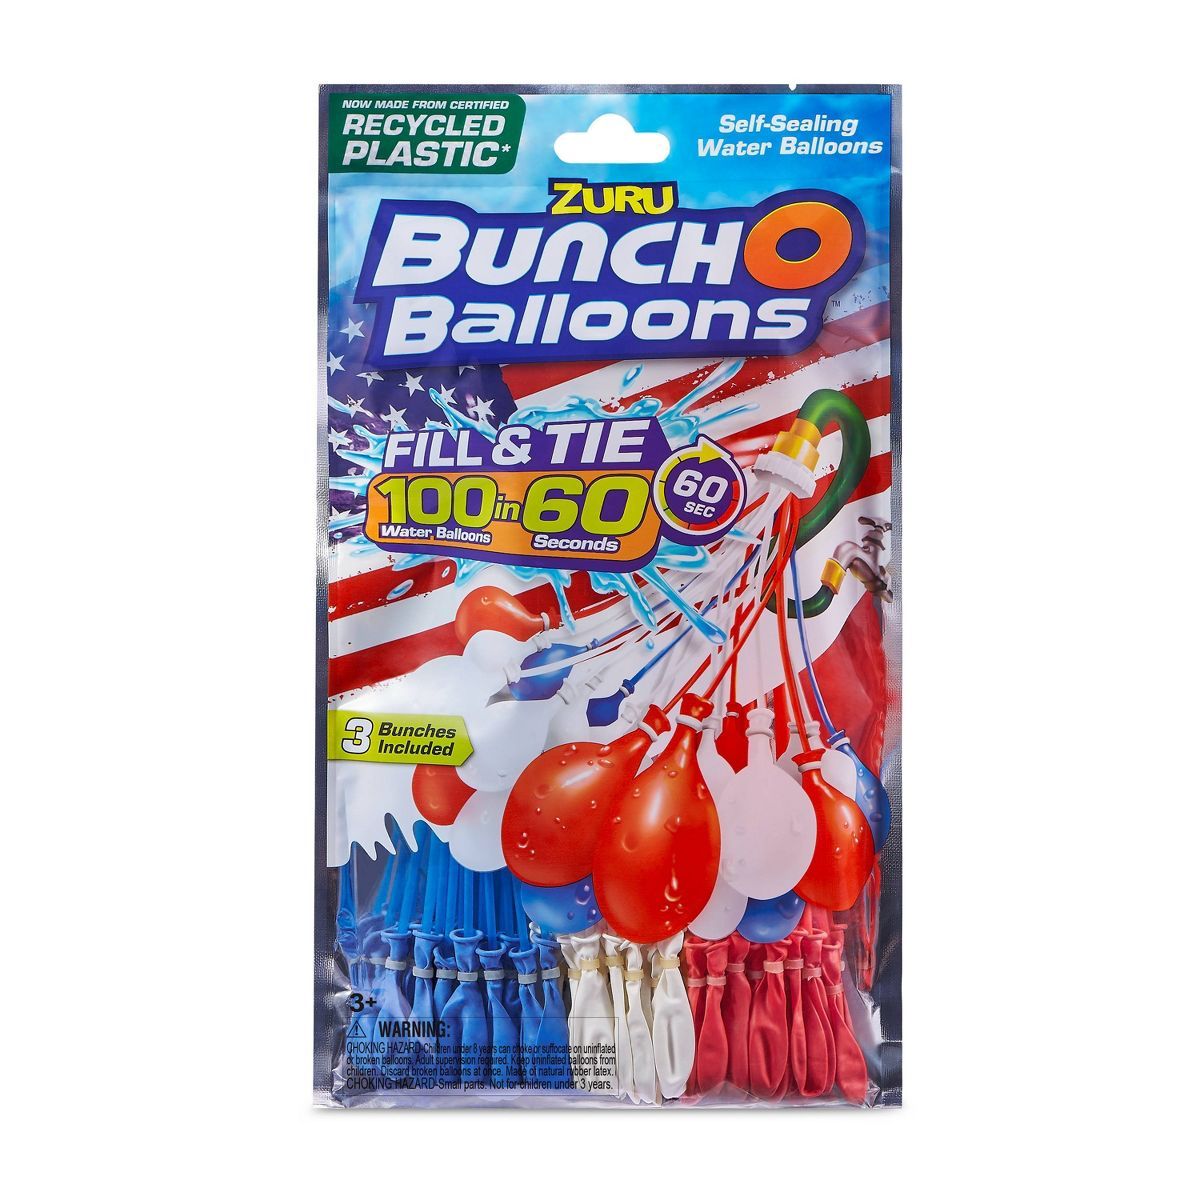 Bunch O Balloons 3pk Rapid-Filling Self-Sealing Water Balloons by ZURU - Red/White/Blue | Target